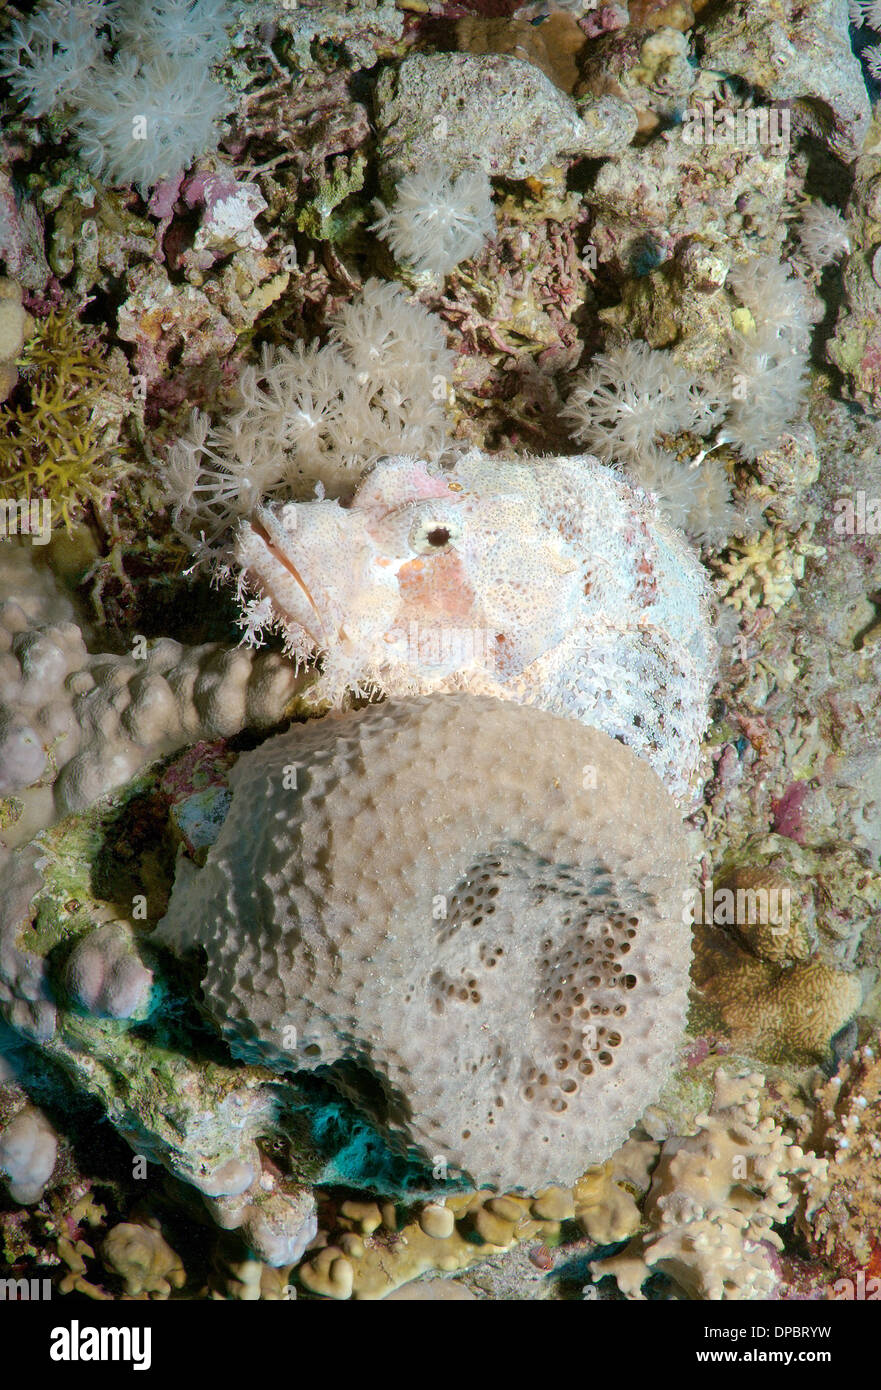 Tassled scorpionfish (Scorpaenopsis oxycephala), Red sea, Egypt, Africa Stock Photo